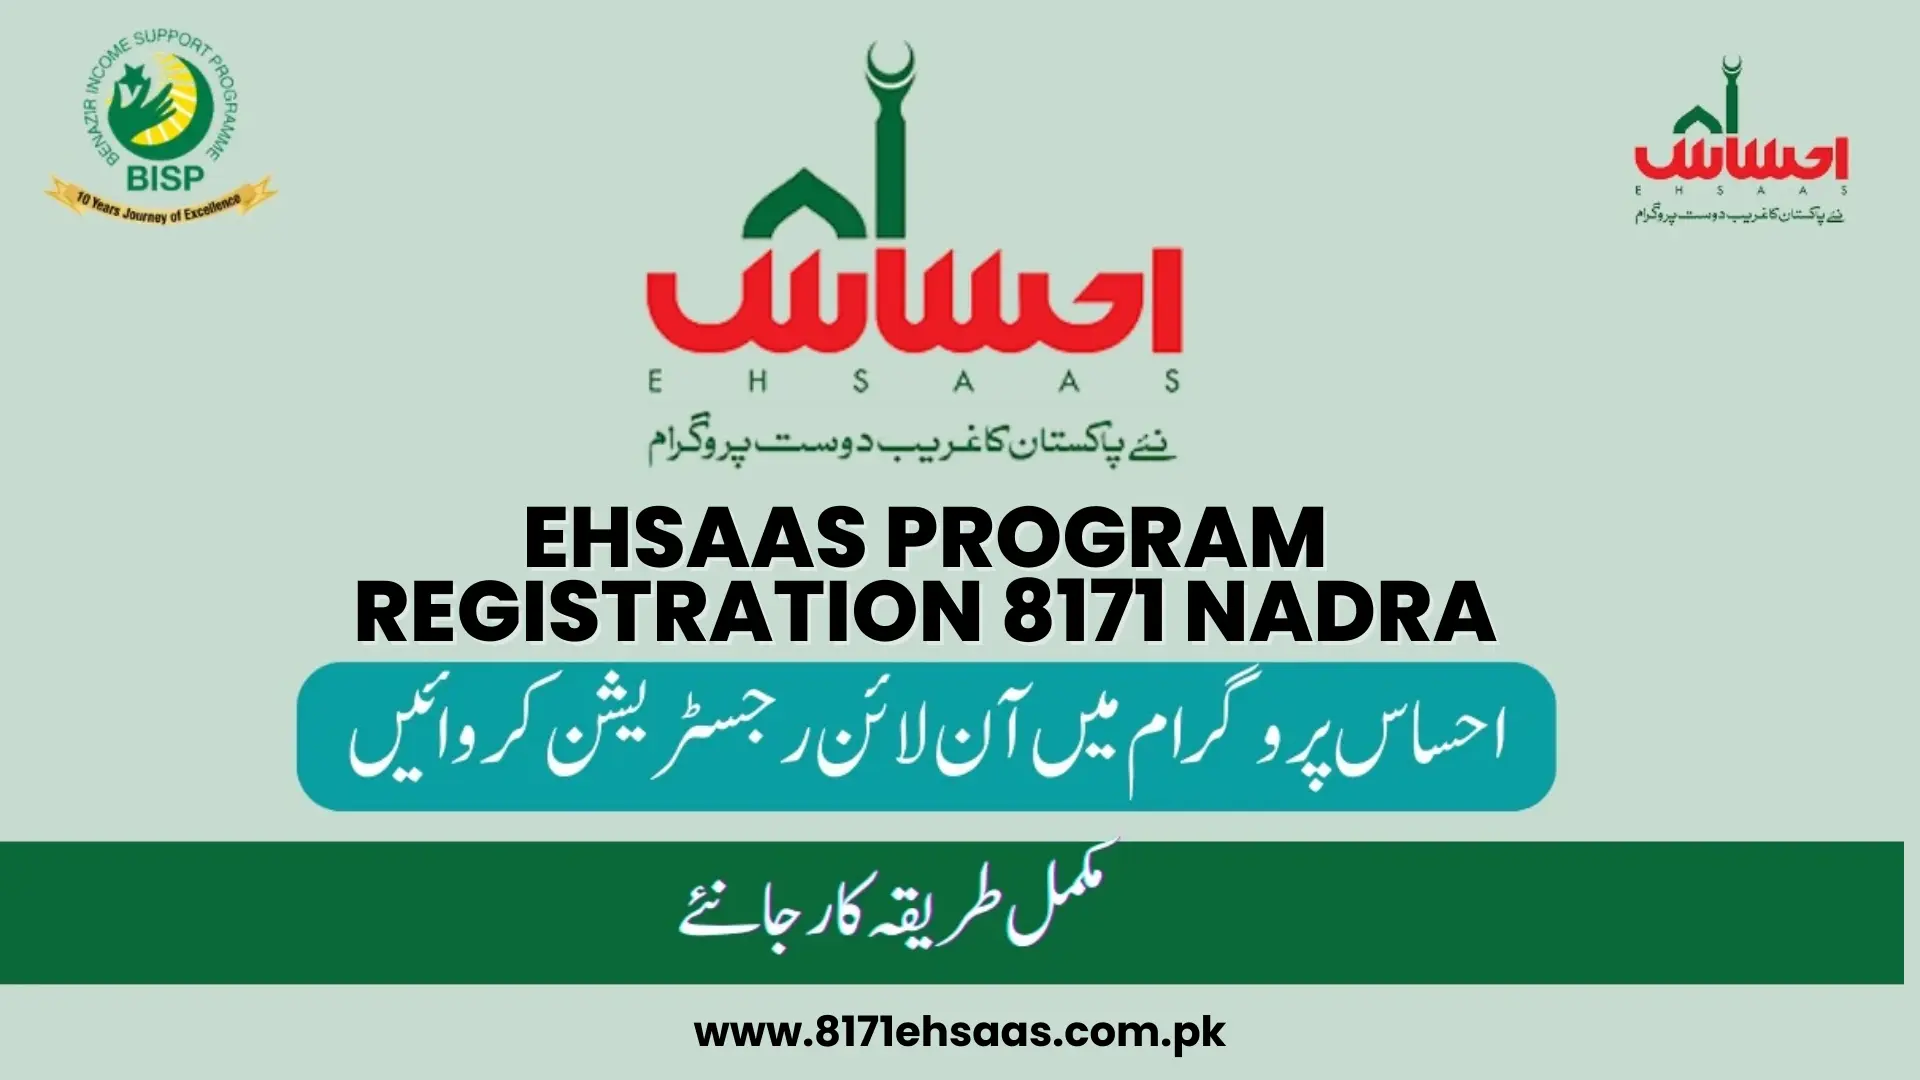 Ehsaas program registration 8171 NADRA